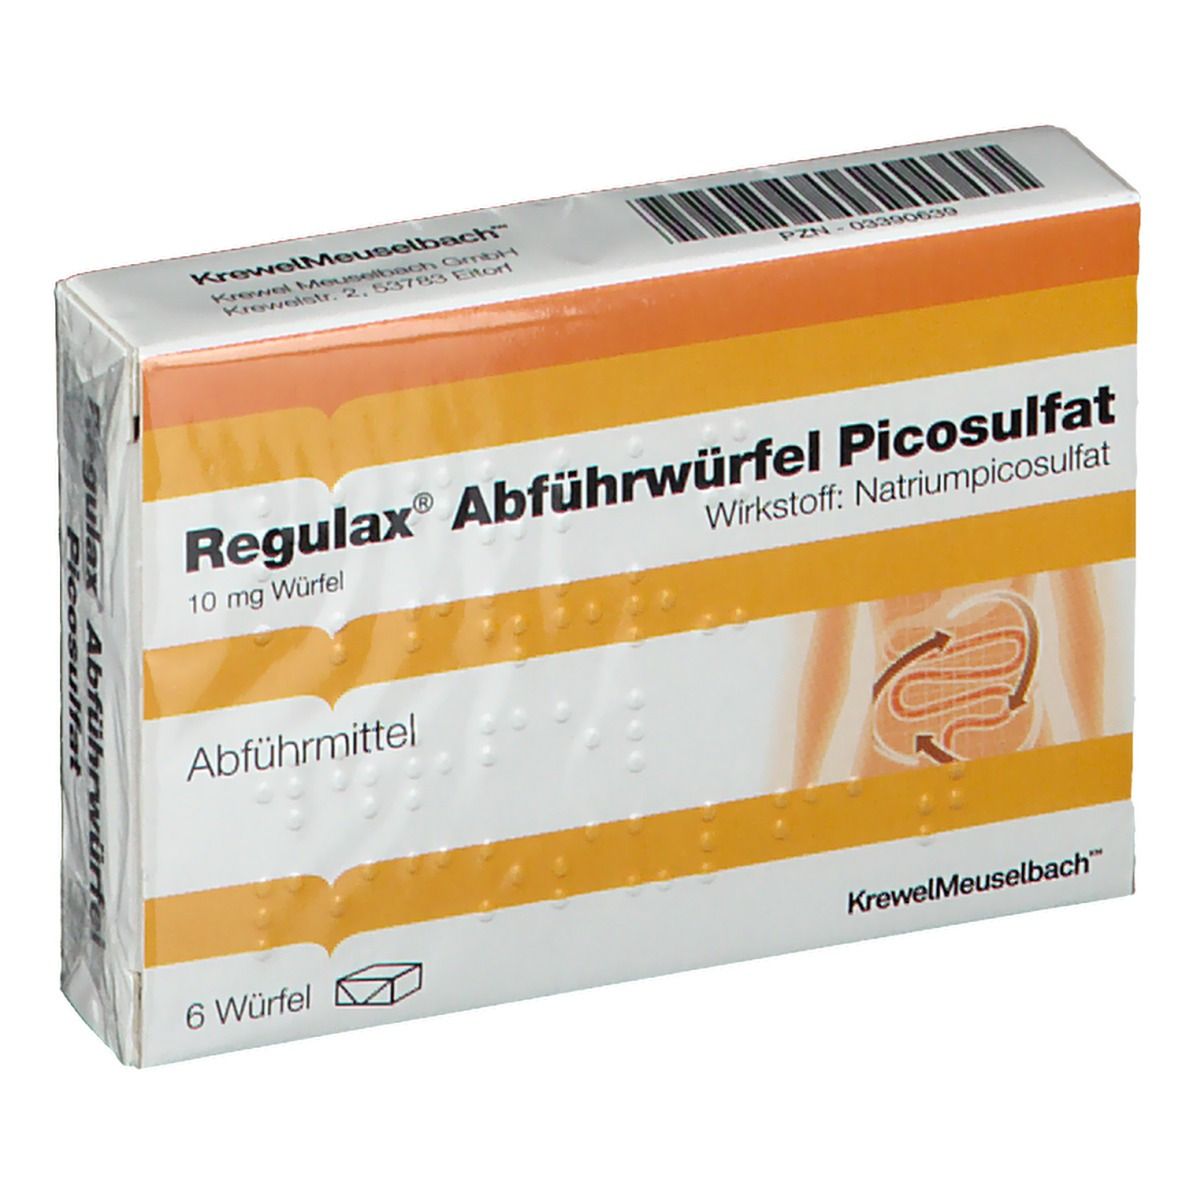 Regulax® Abführwürfel Picosulfat